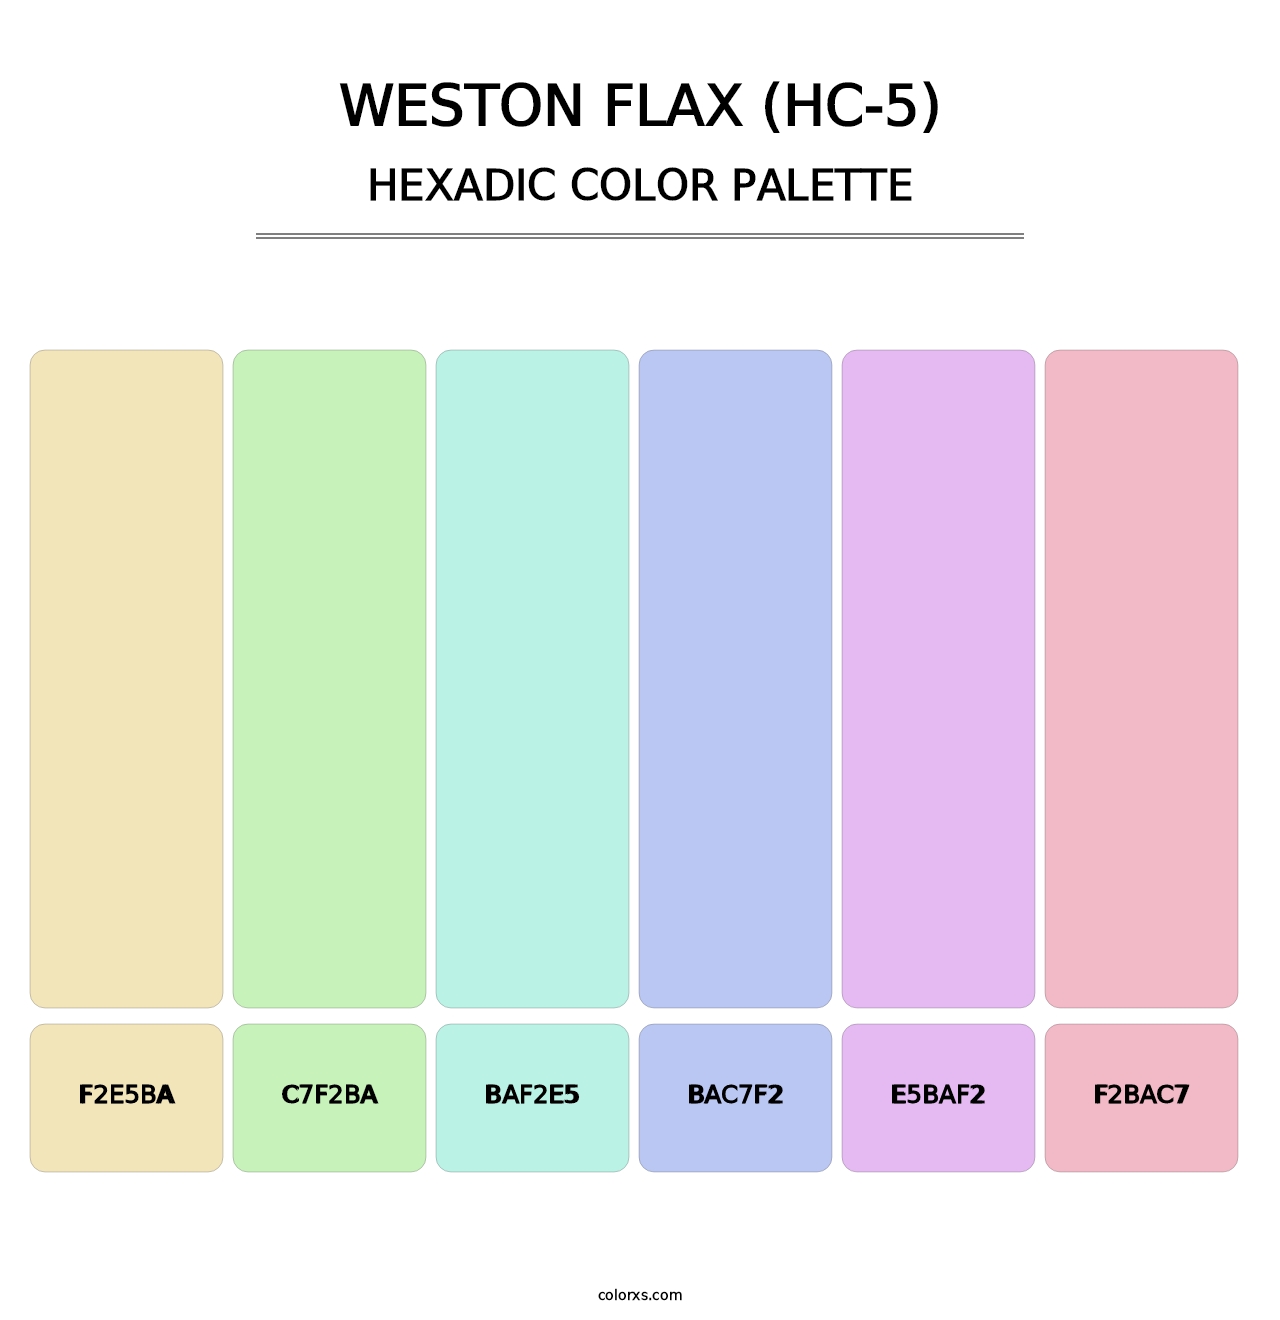 Weston Flax (HC-5) - Hexadic Color Palette